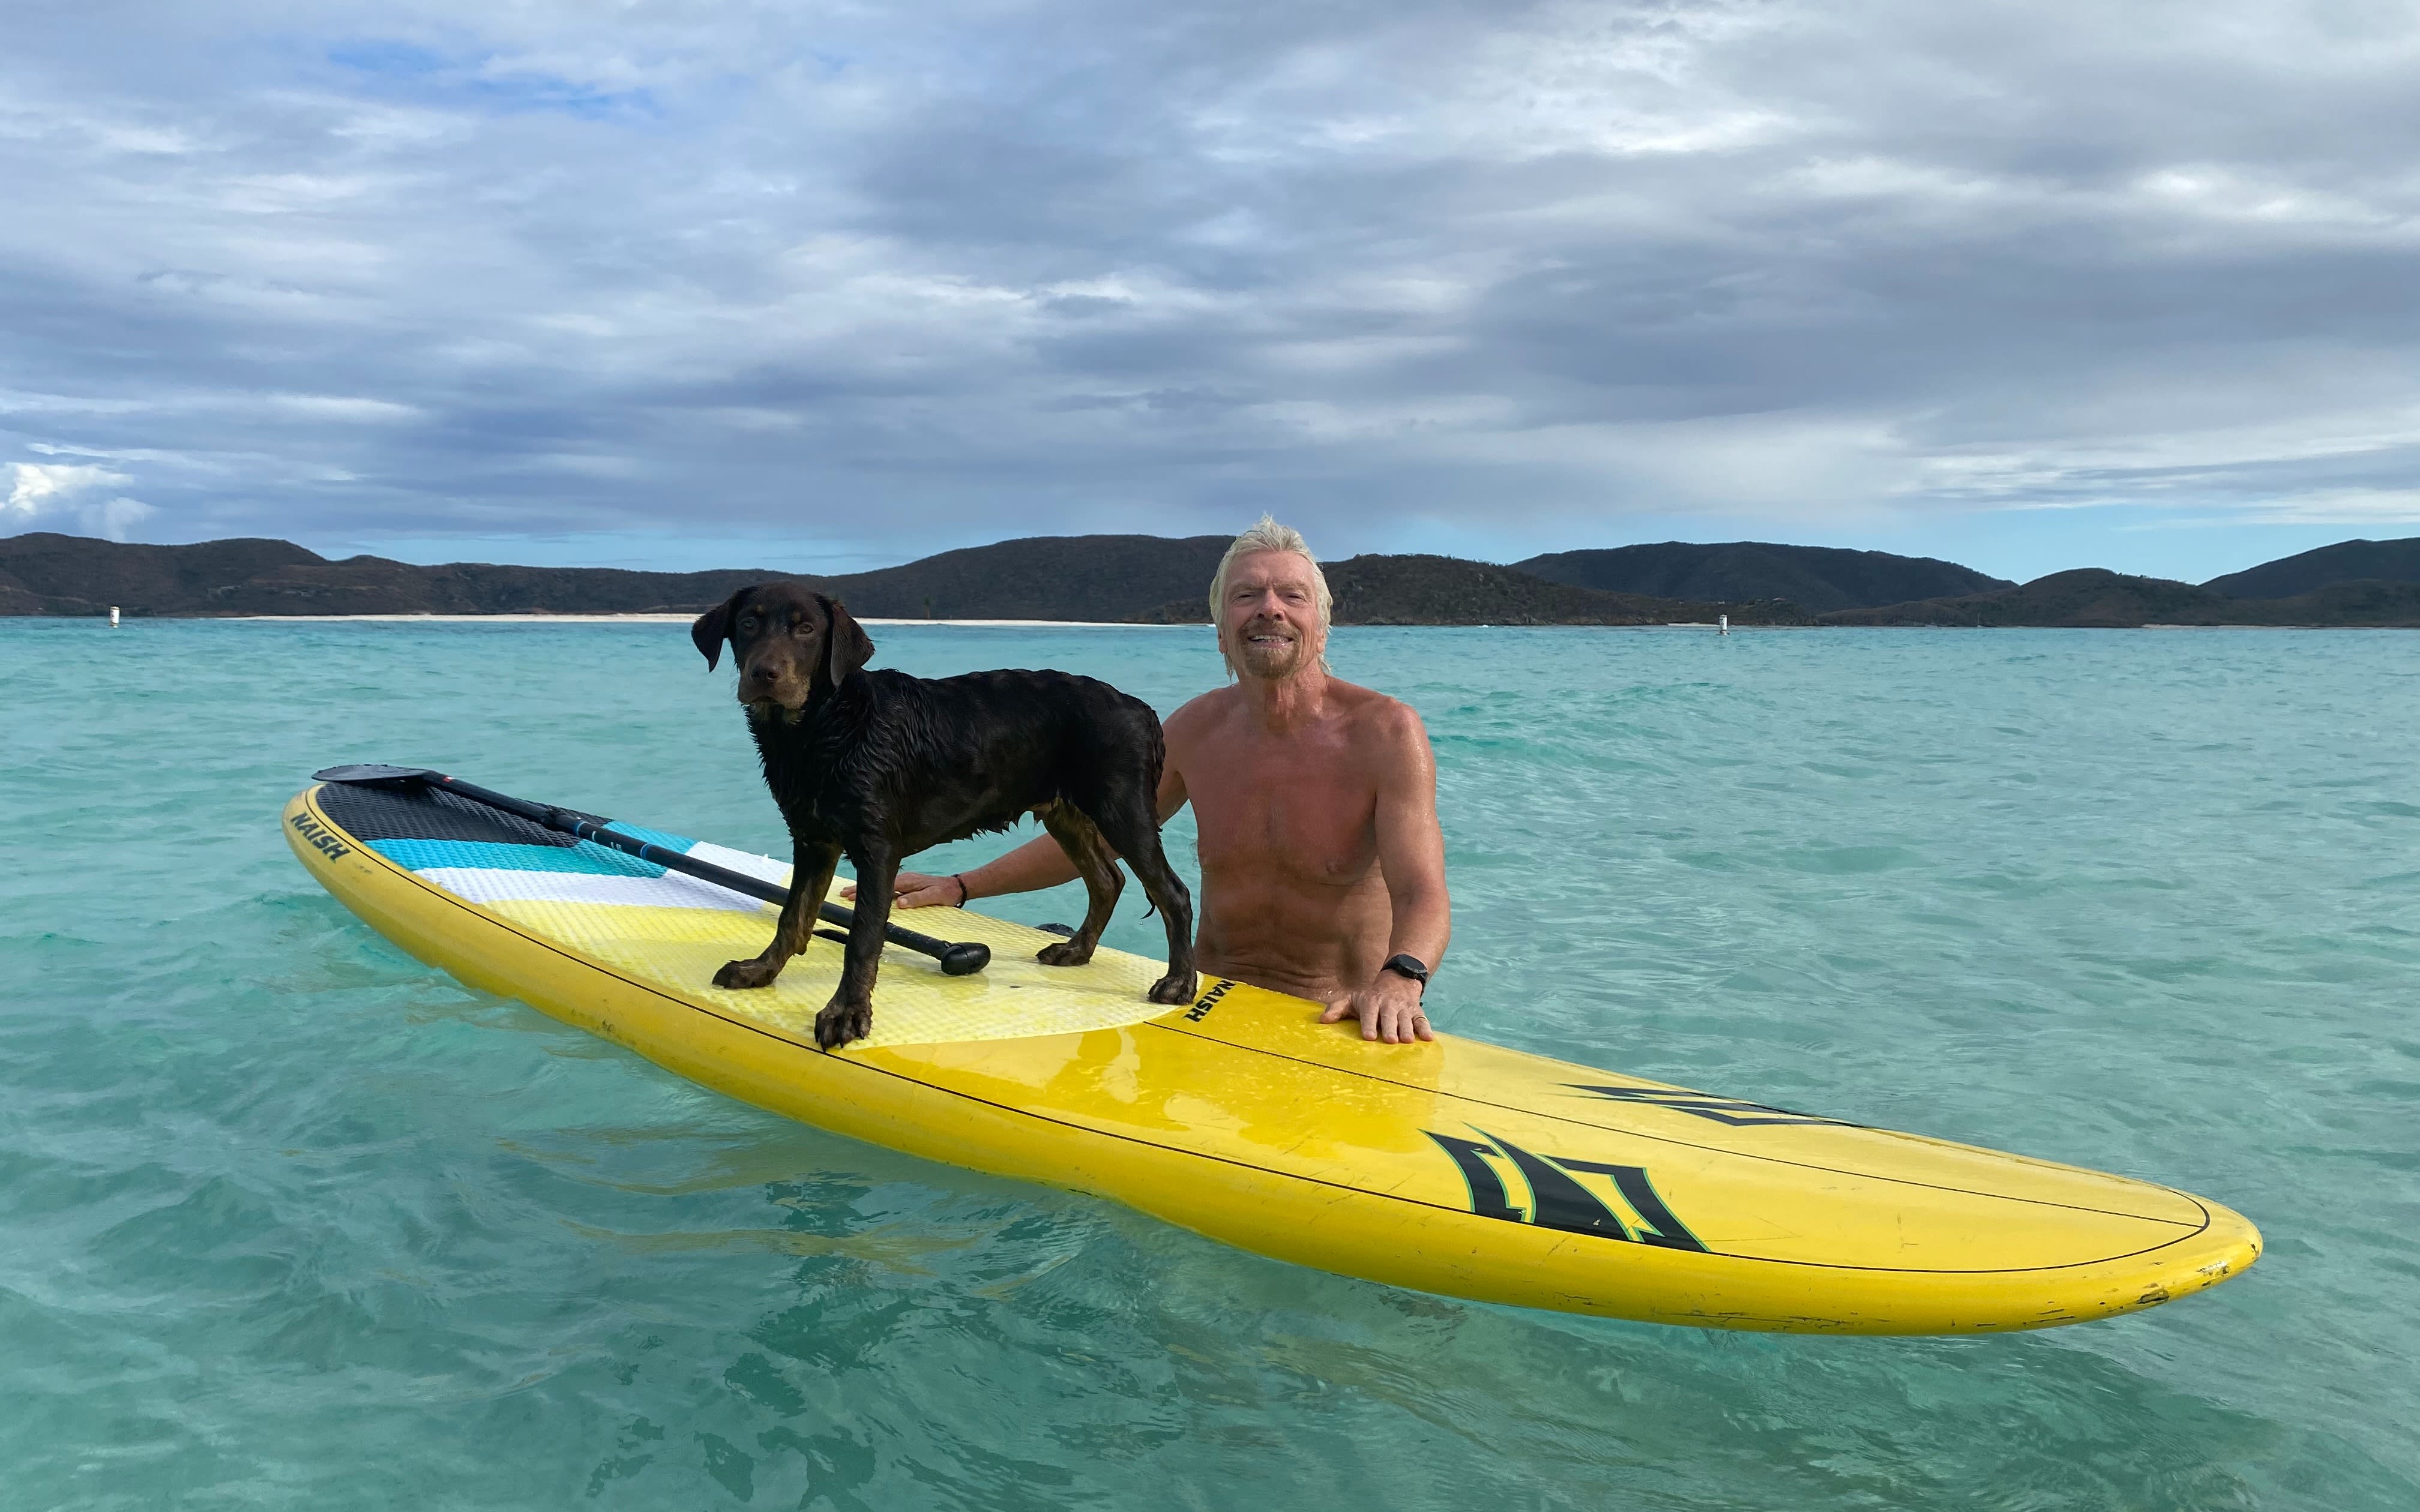 Richard Branson teaches his new puppy to swim